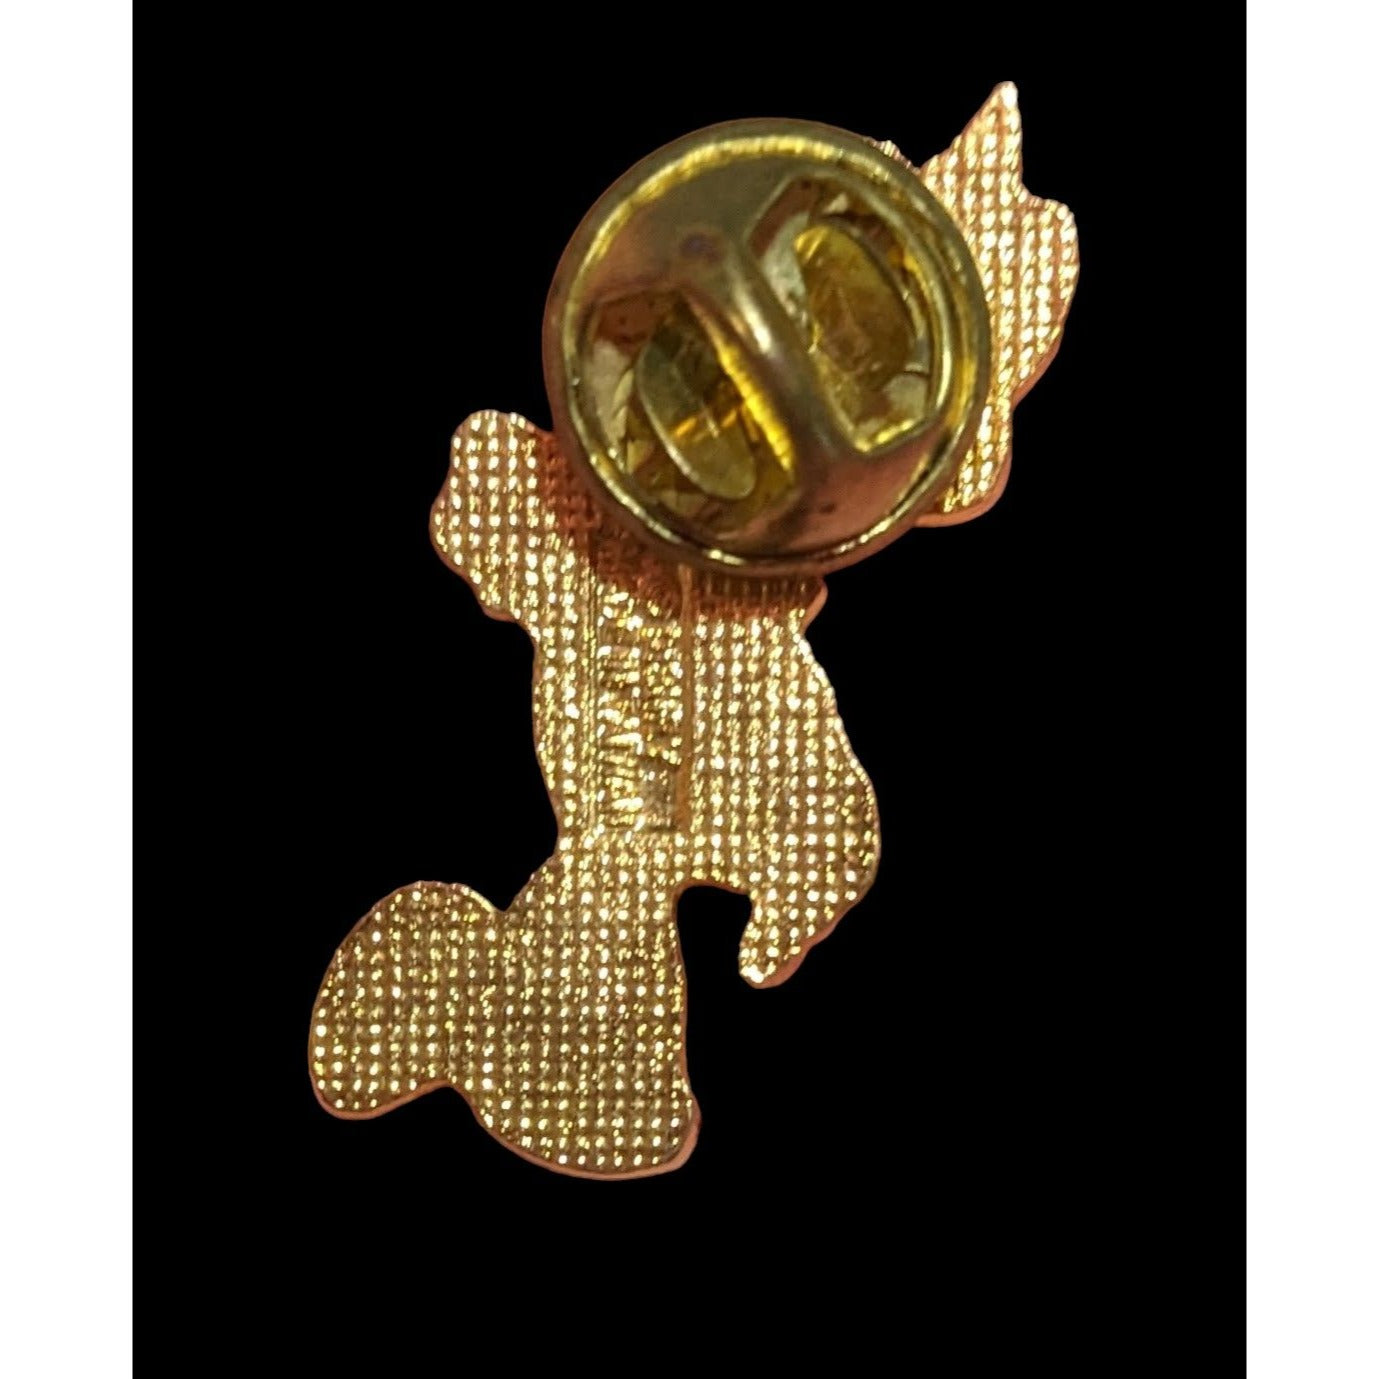 Vintage Disney Pinocchio Collectible Pin